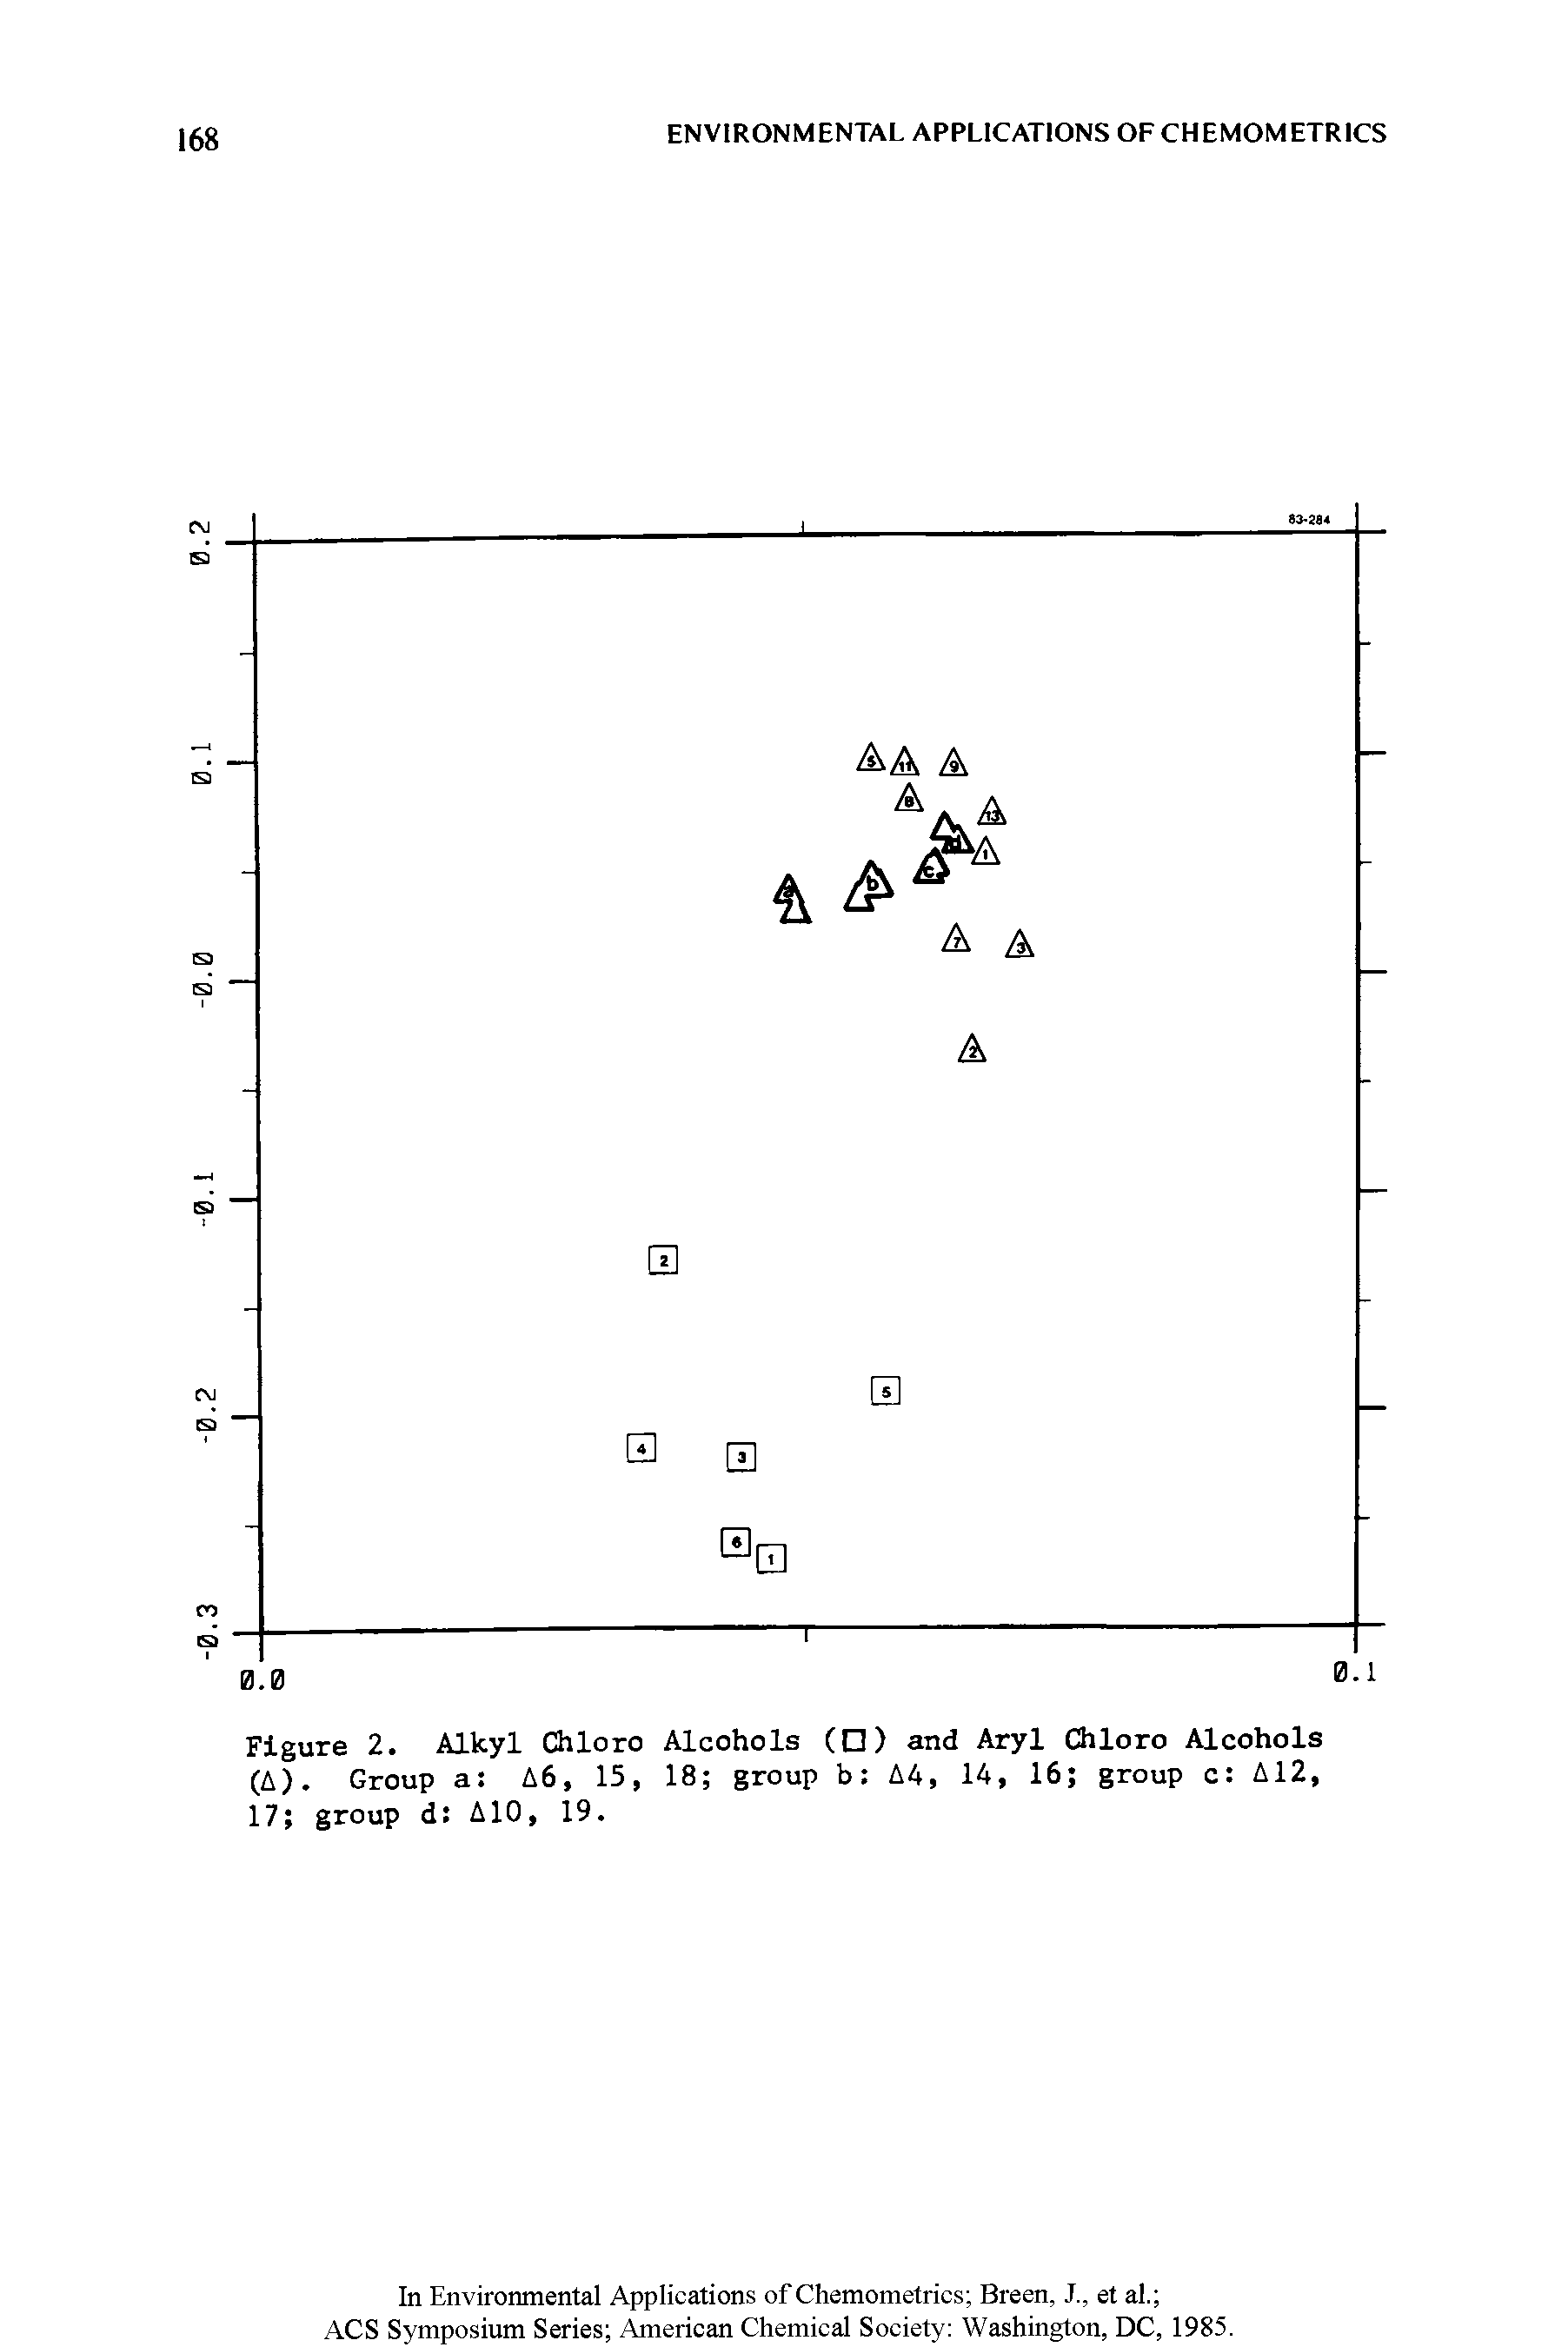 Figure 2. Alkyl Chloro Alcohols ( ) and Aryl Chloro Alcohols (A). Group a A6, 15, 18 group b A4, 14, 16 group c A12, 17 group d A10, 19.